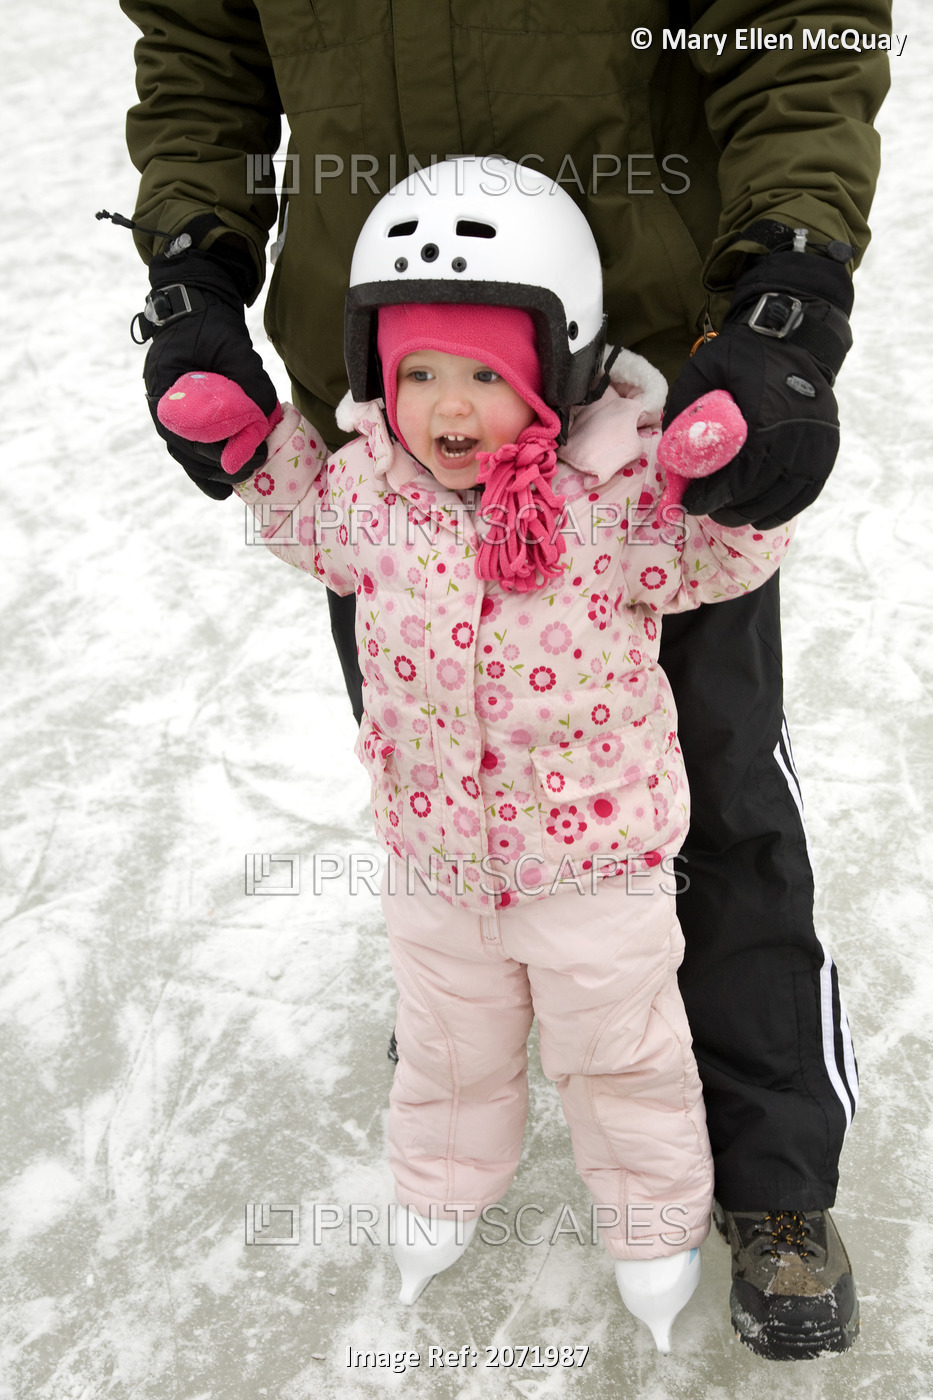 Artist's Choice: Dad Teaching Daughter To Skate, Ontario